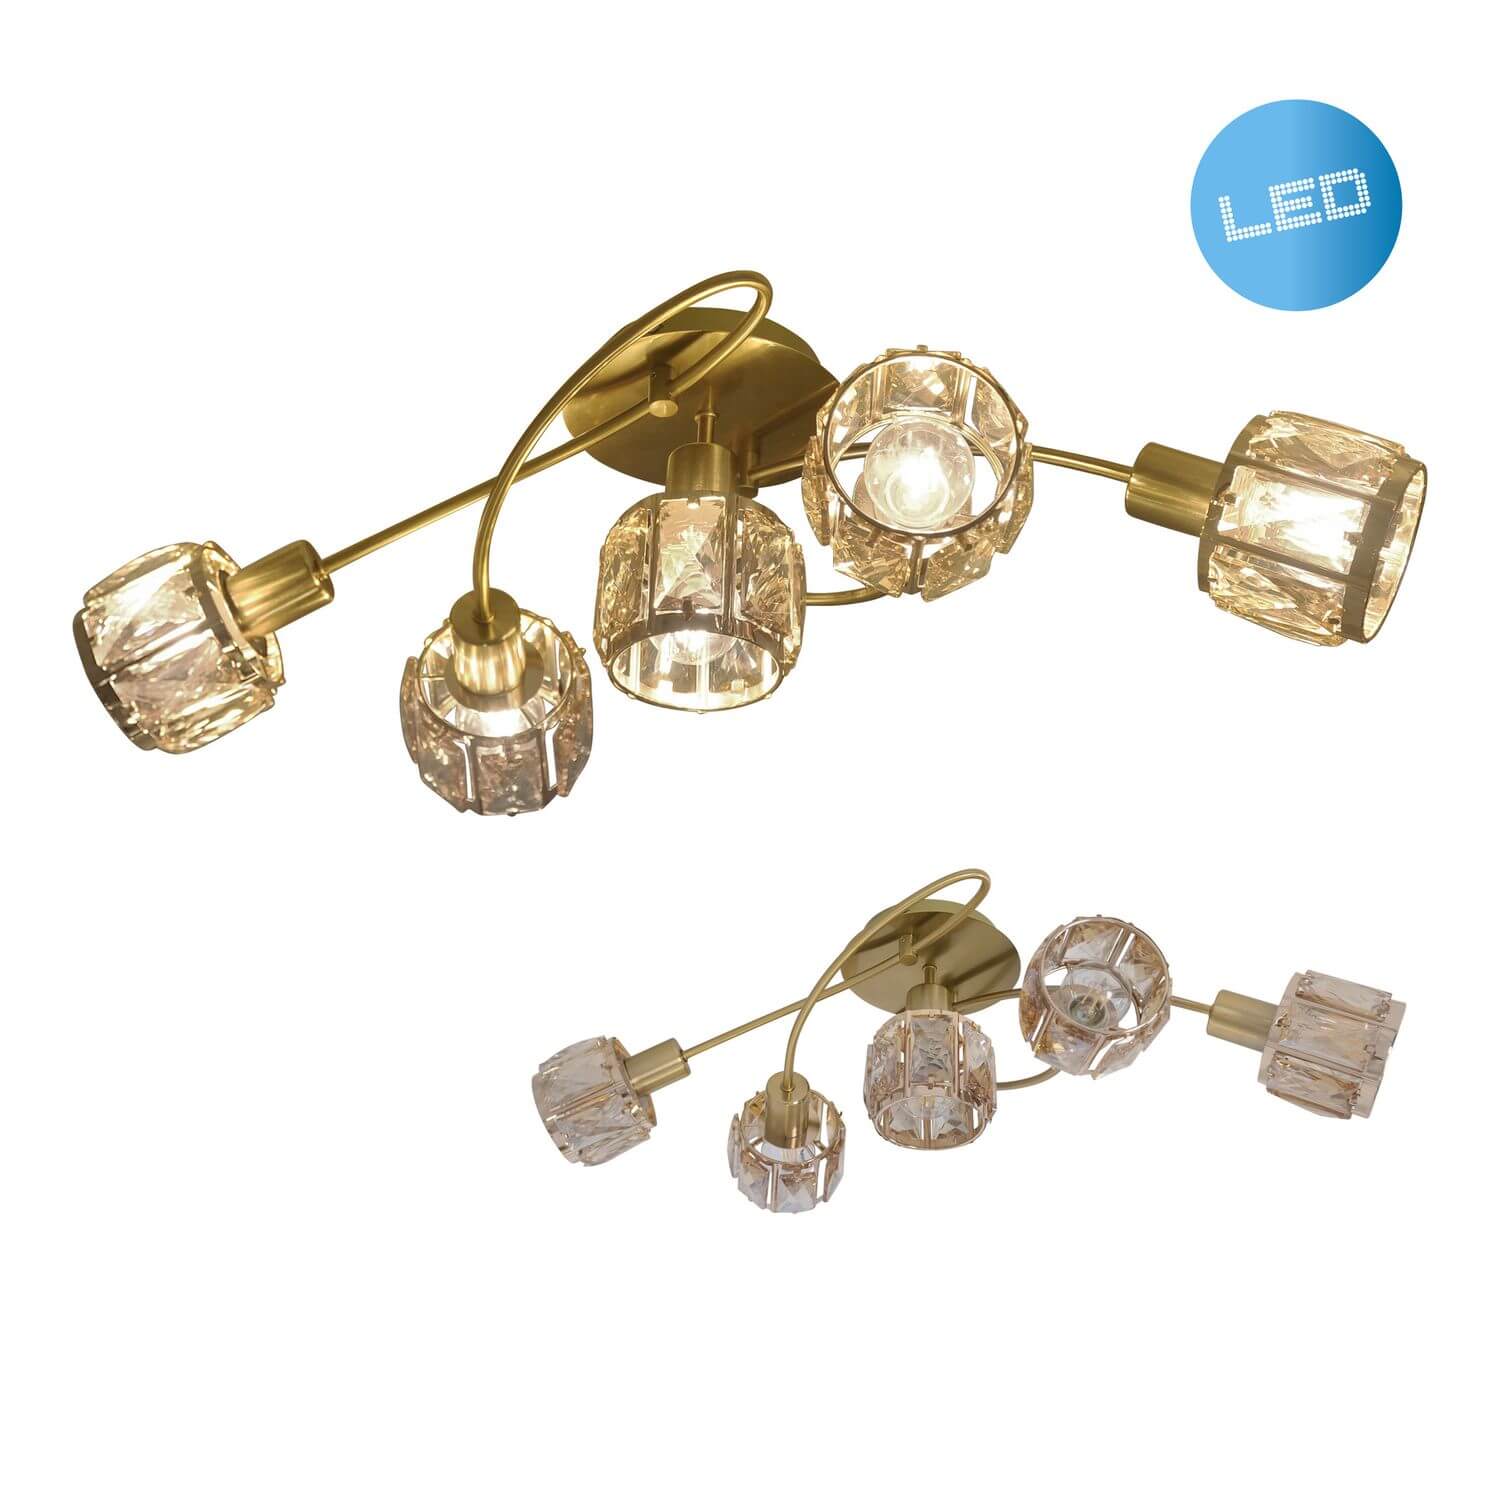 Näve LED Spotleuchte JOSEFA 61x36cm 200W Warmweiss gold 1281058 | eBay